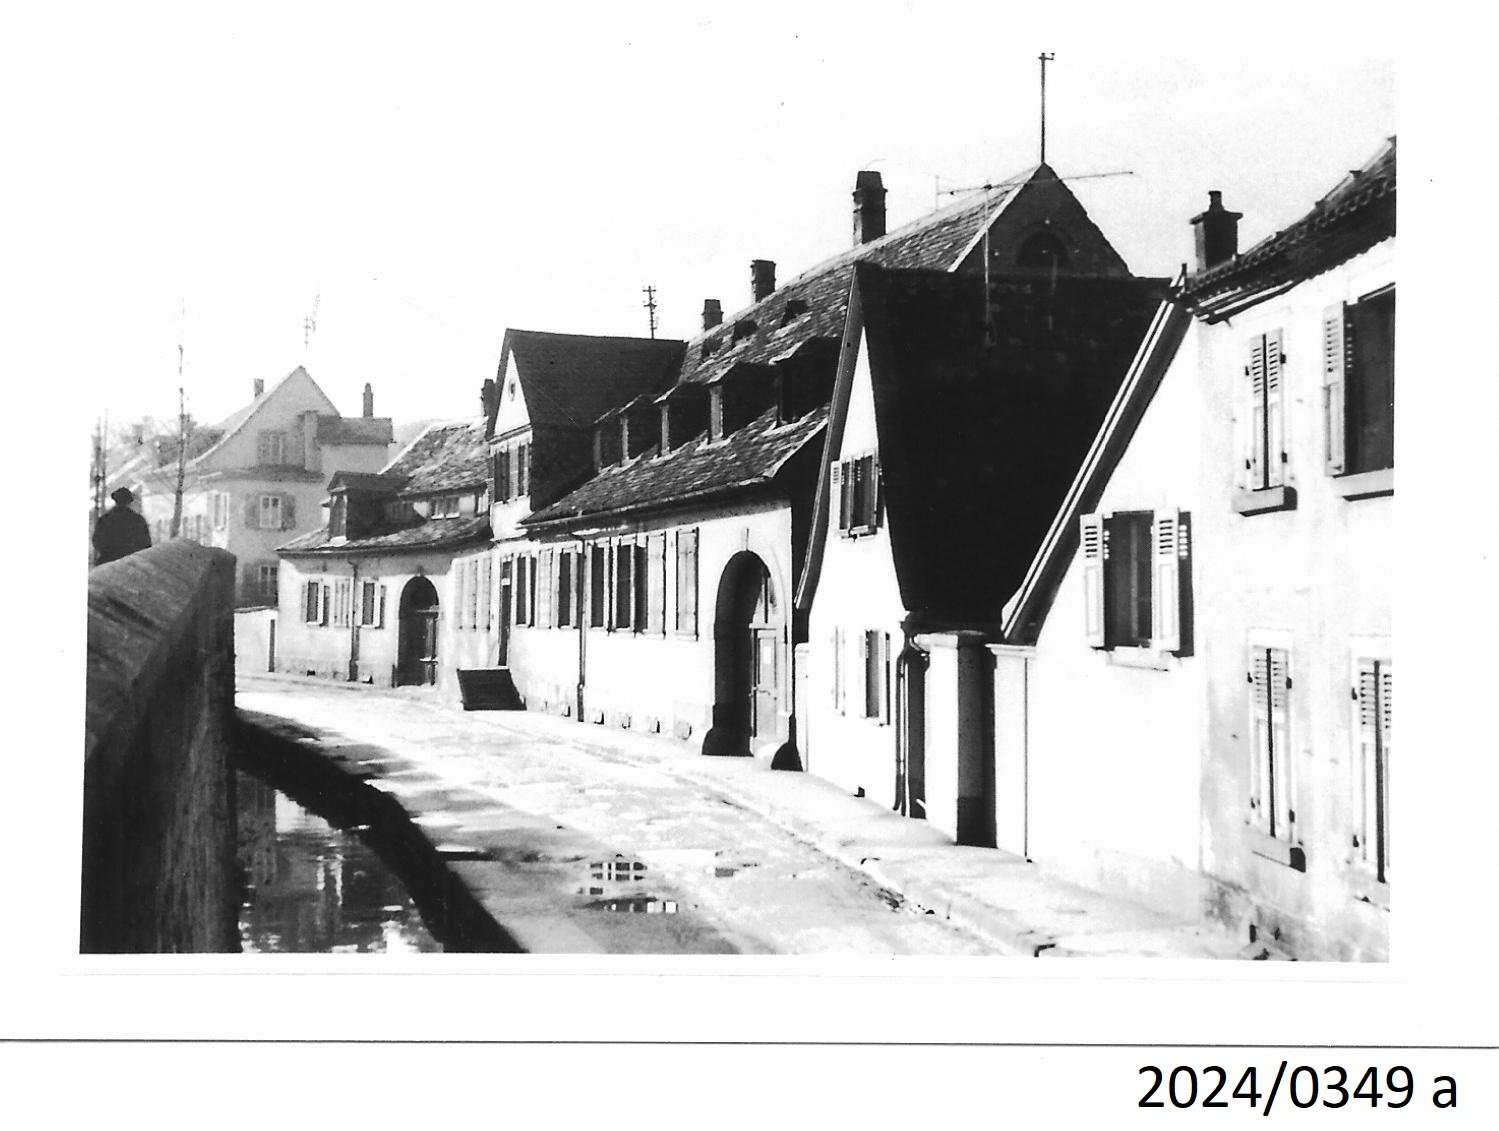 Bad Dürkheim, Blick in die Gerberstraße, 1930er Jahre (Stadtmuseum Bad Dürkheim im Kulturzentrum Haus Catoir CC BY-NC-SA)